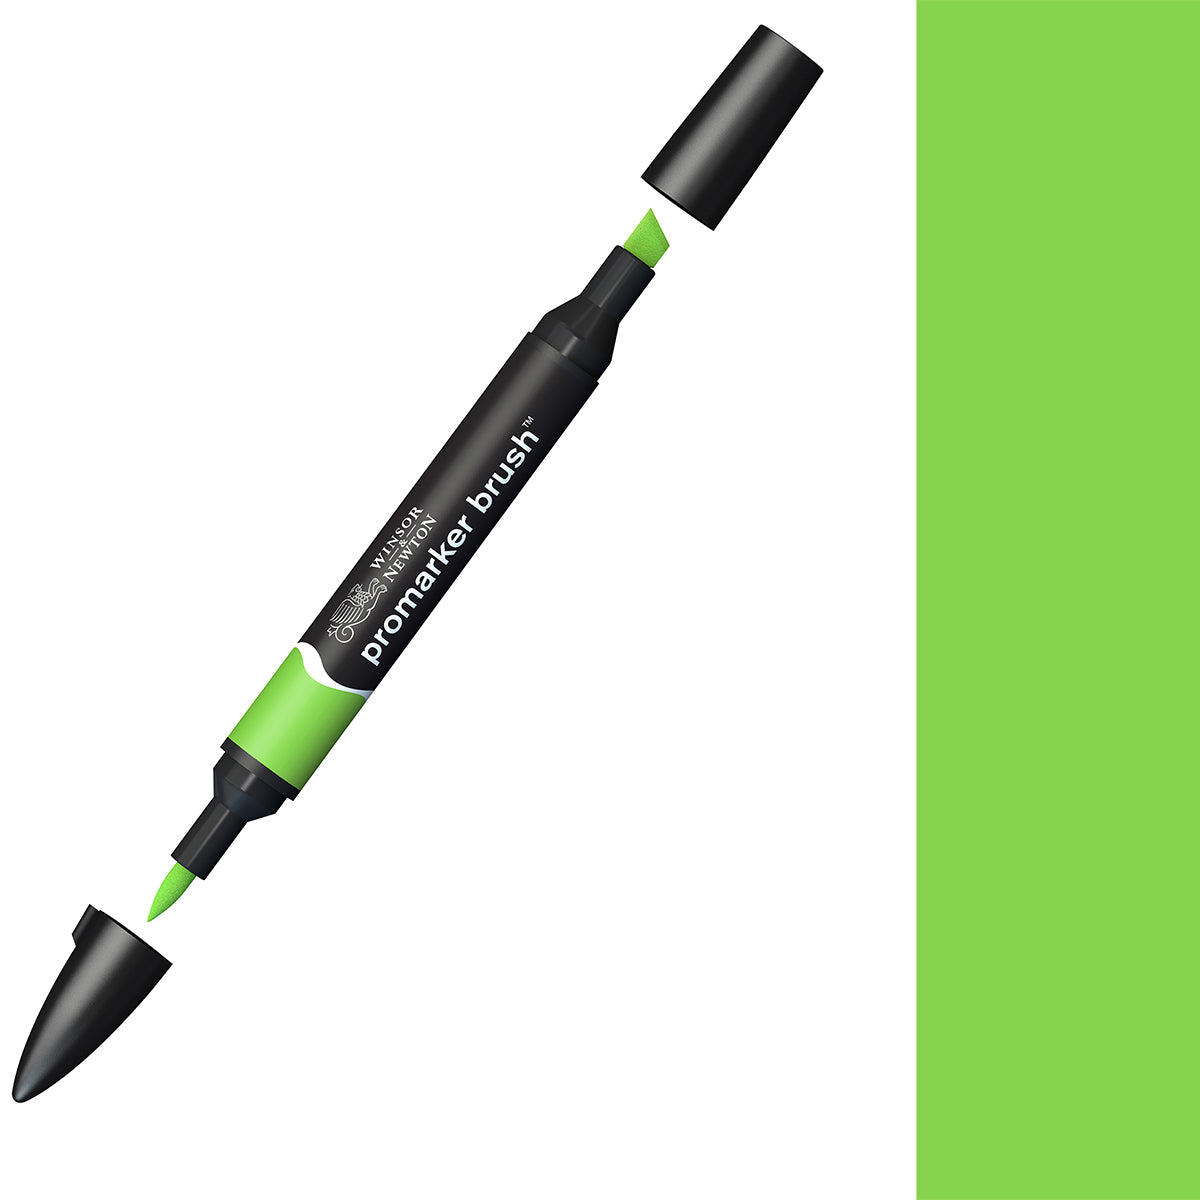 Winsor & Newton - Promarker Brush - Bright Green - BrushMarker